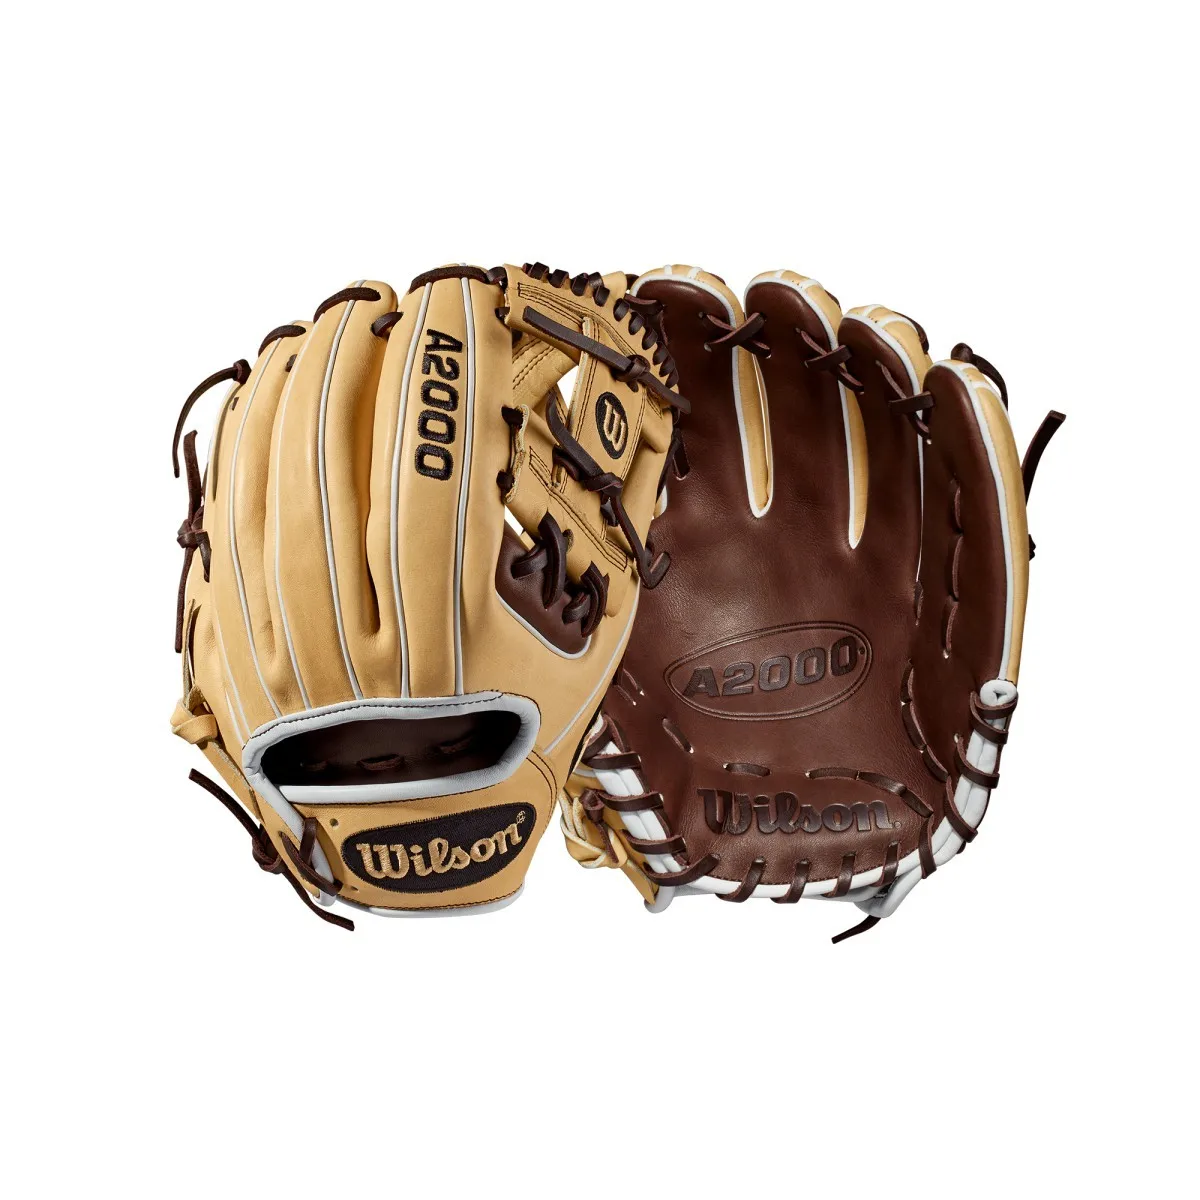 Wholesale 2020 a2000 baseball glove baseball & softball gloves leather From  m.